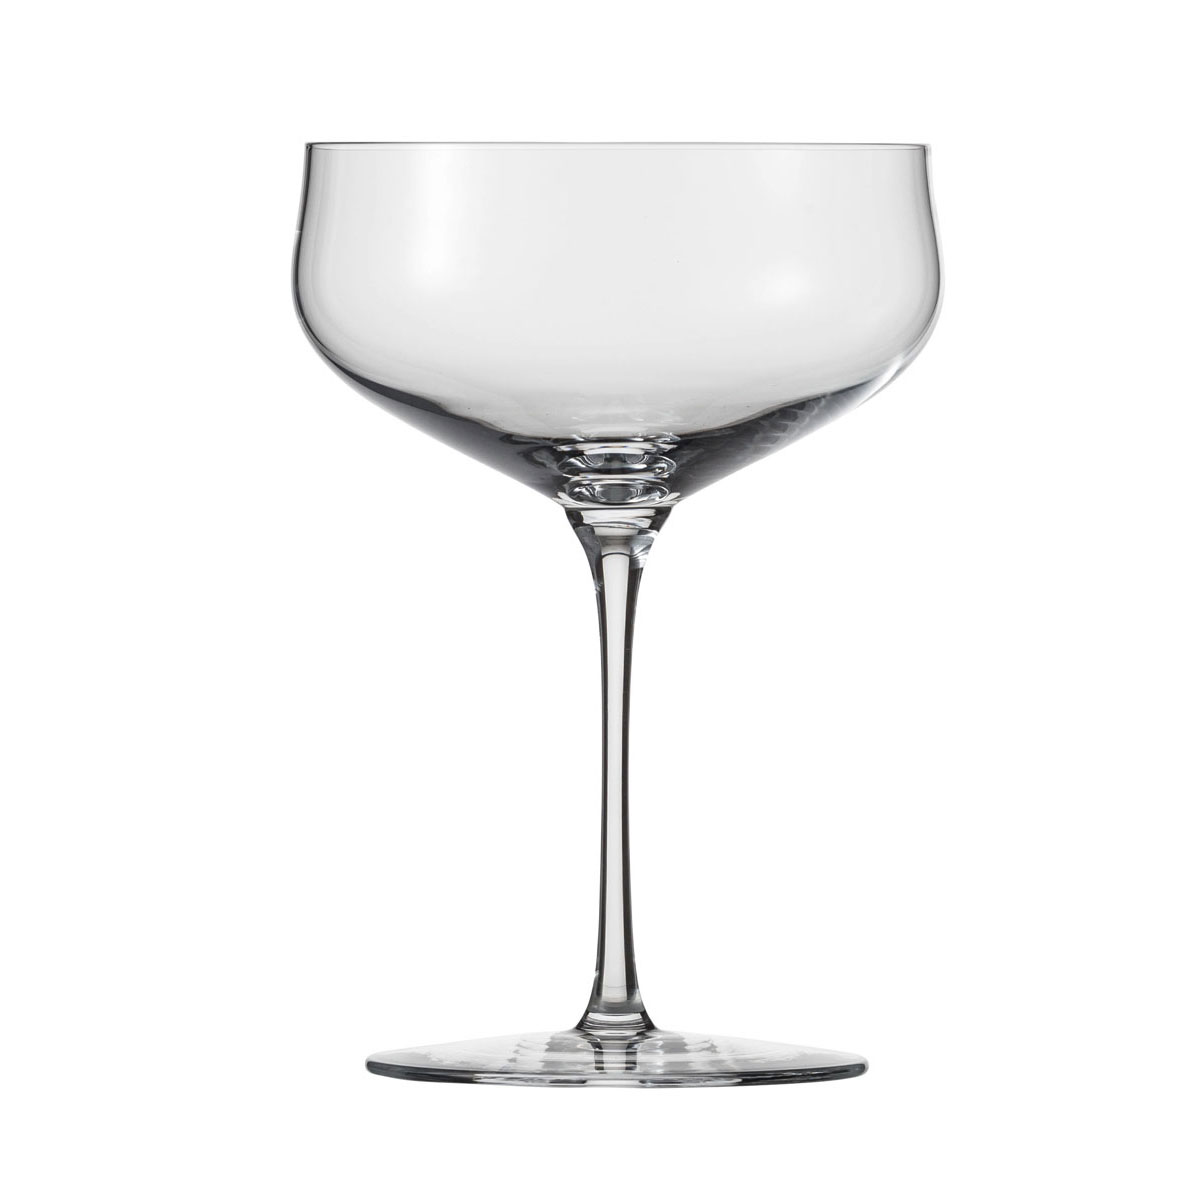 Schott Zwiesel Tritan Crystal, Air Saucer Crystal Champagne Glass, Single